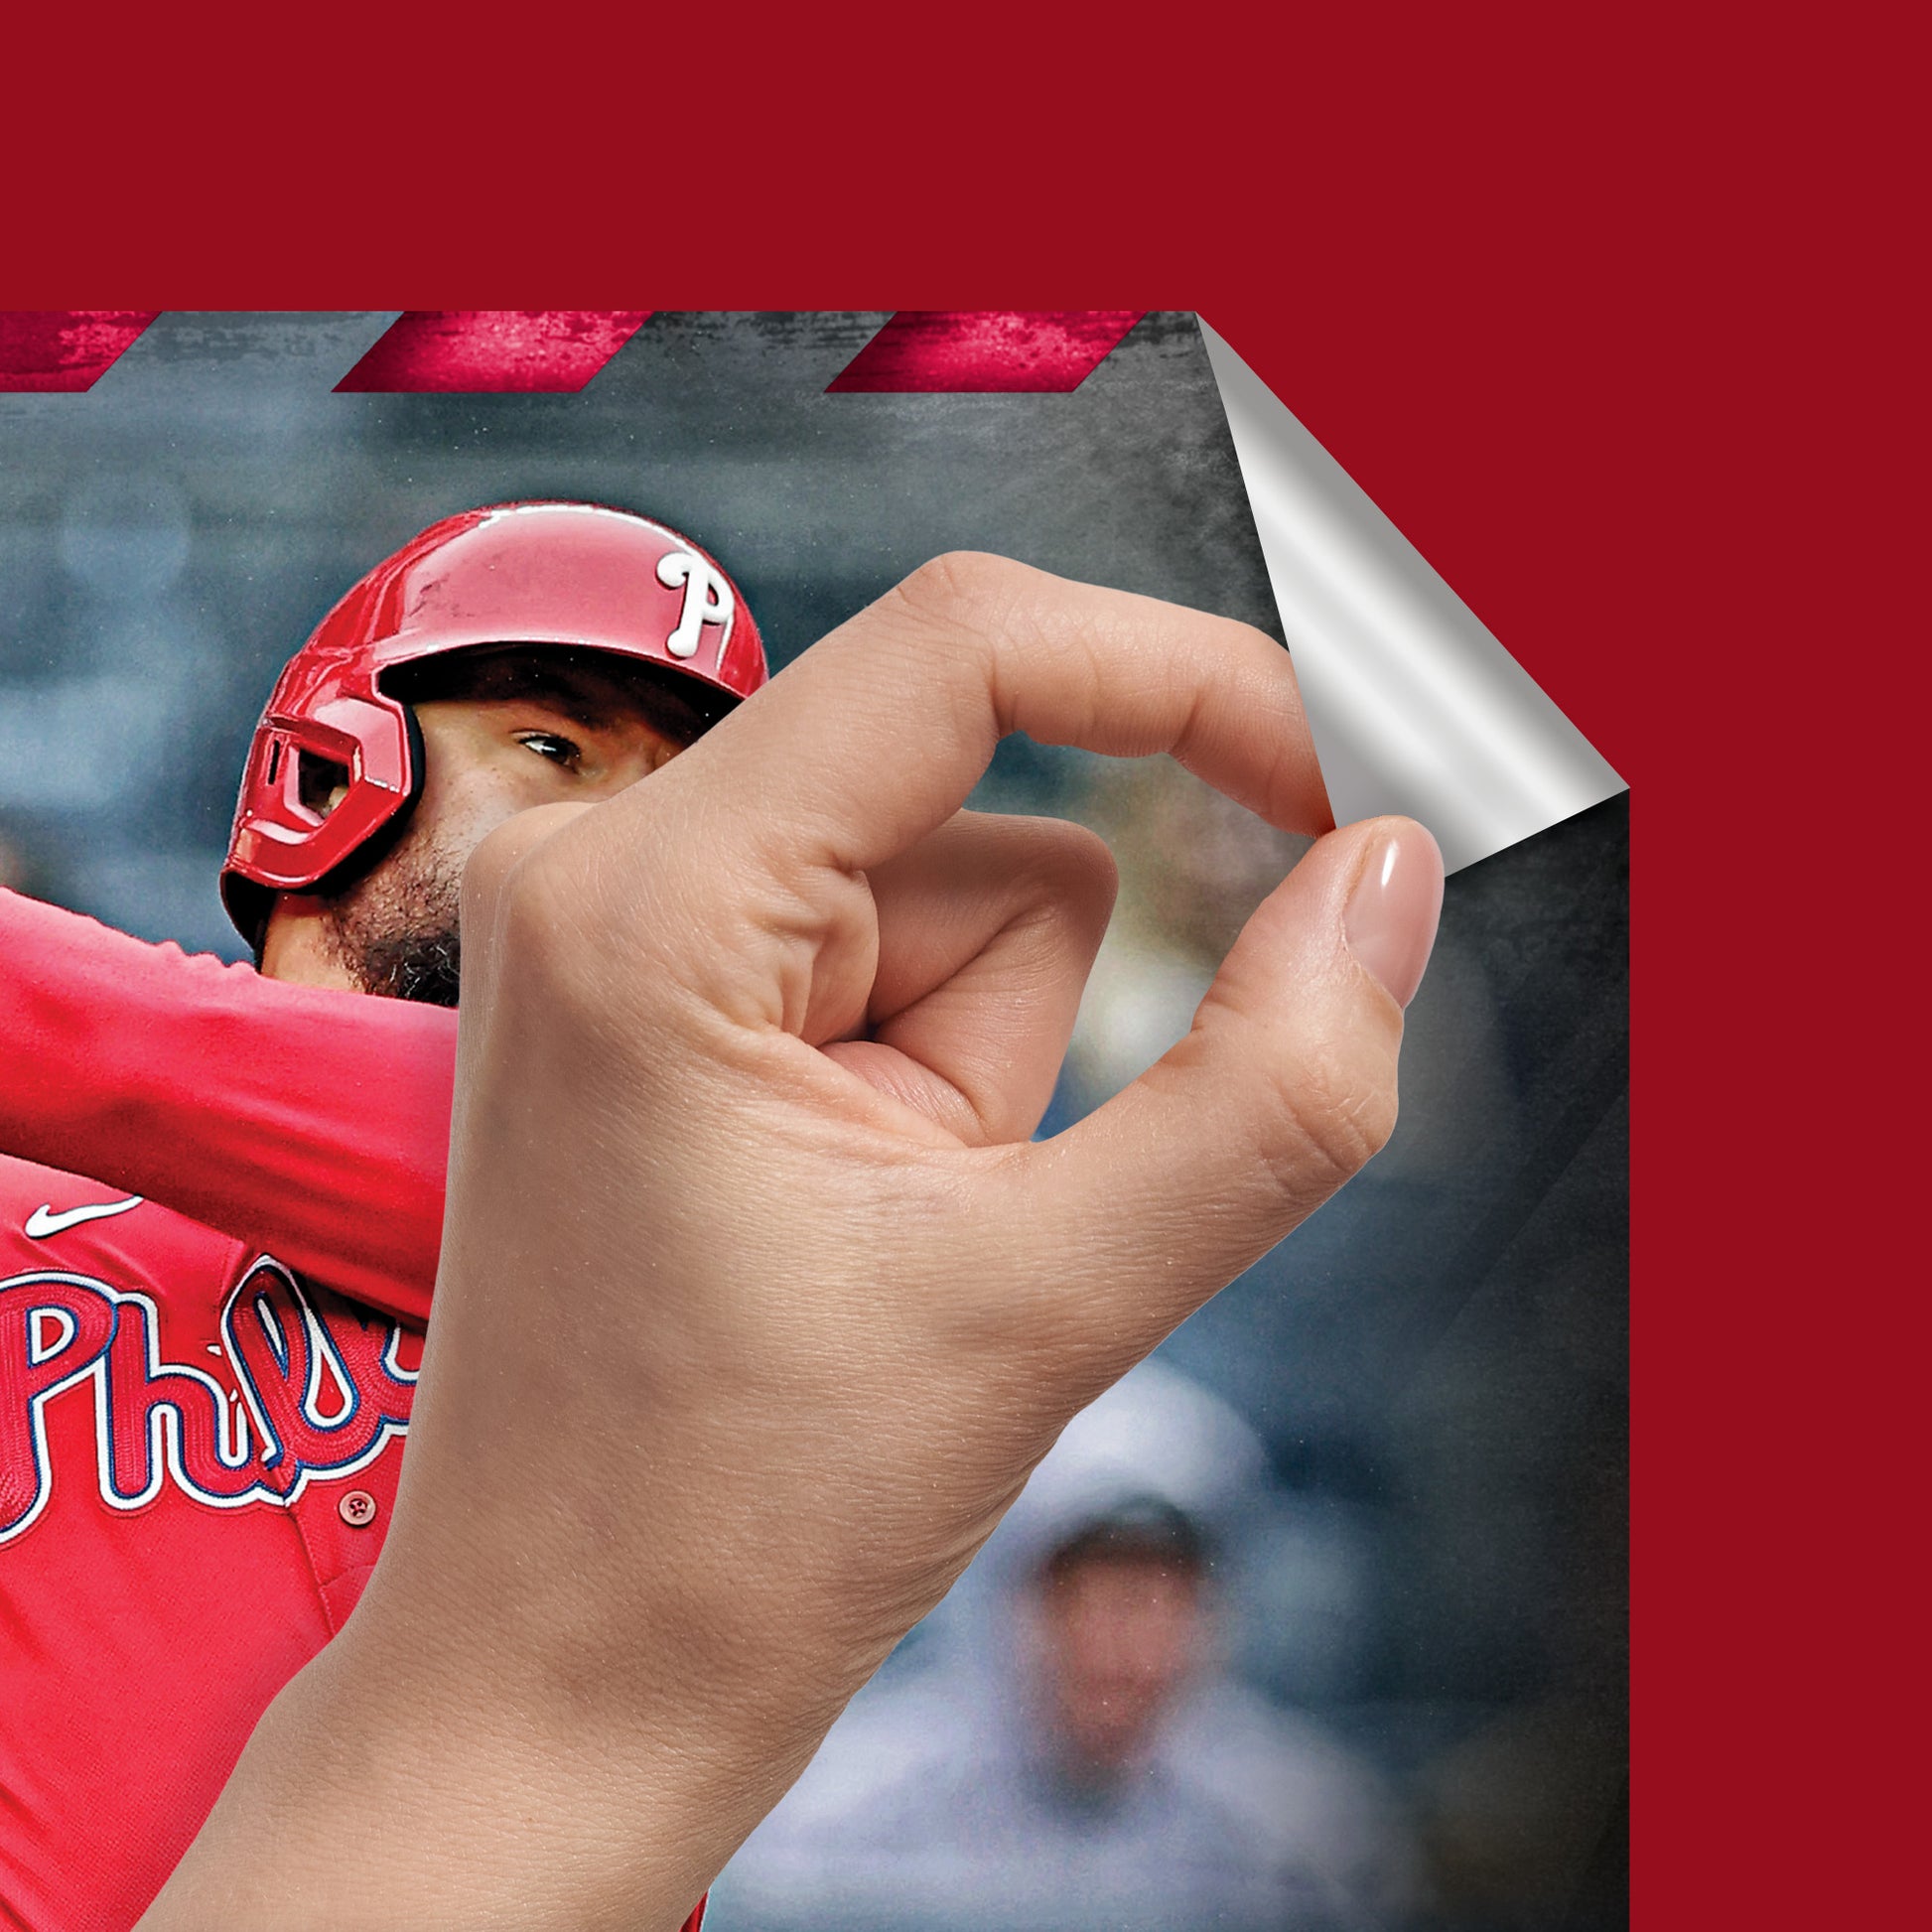 Philadelphia Phillies: Kyle Schwarber 2022 Poster - Officially